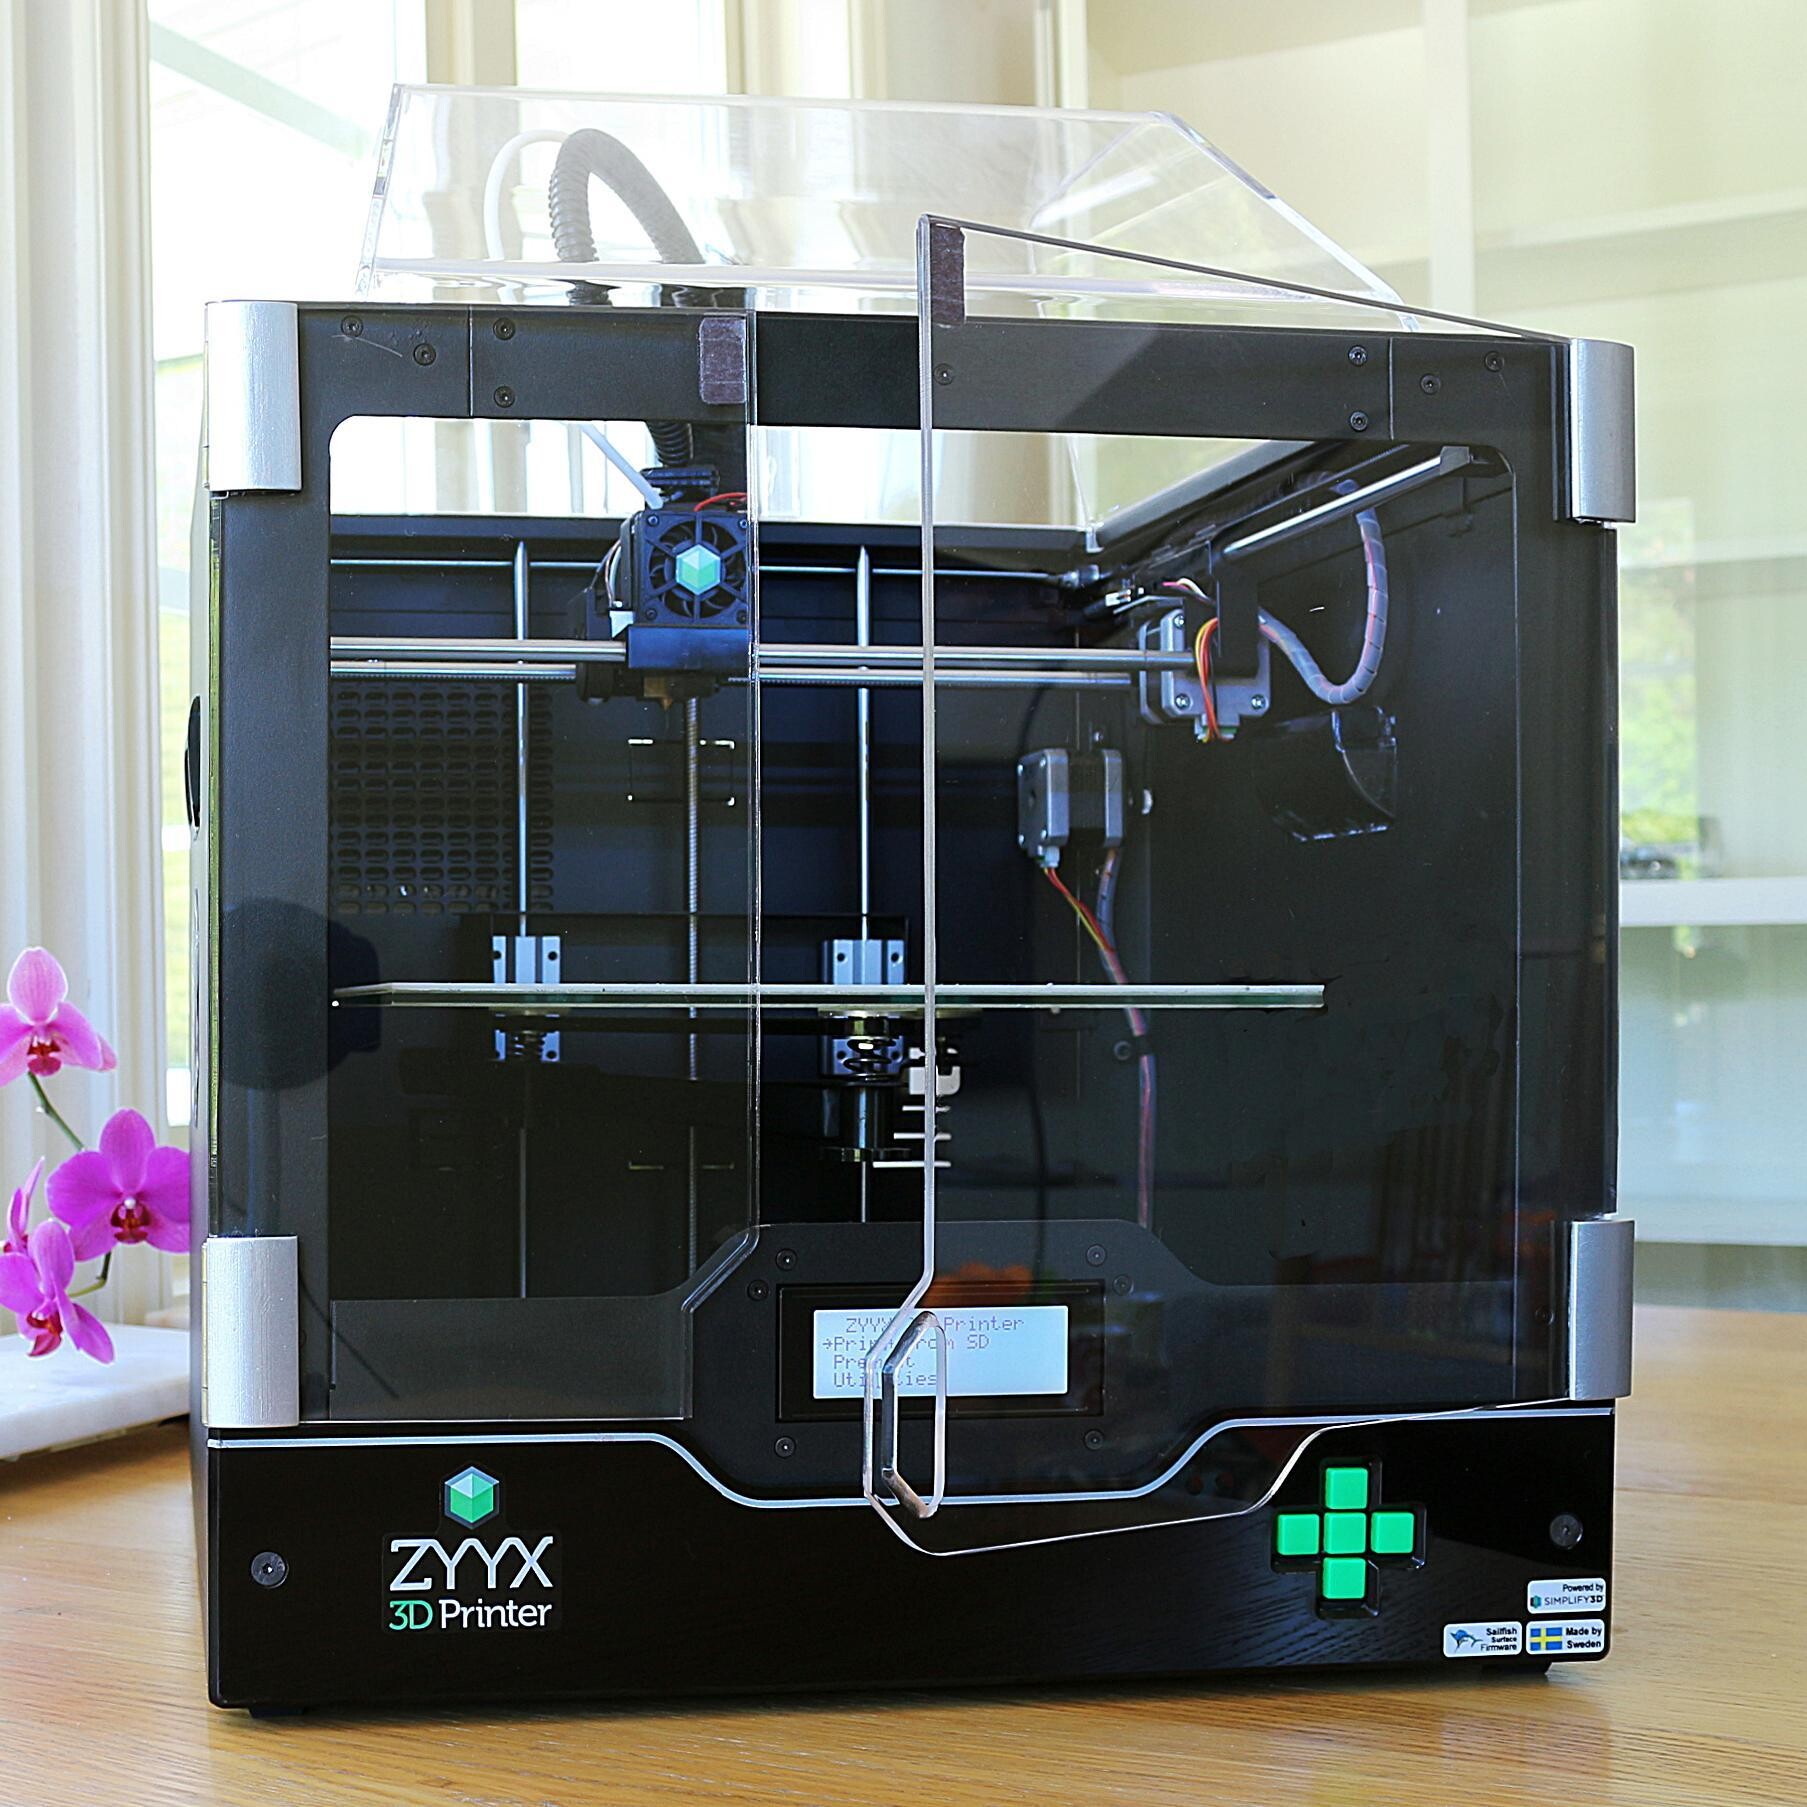 ZYYX 3D Printer